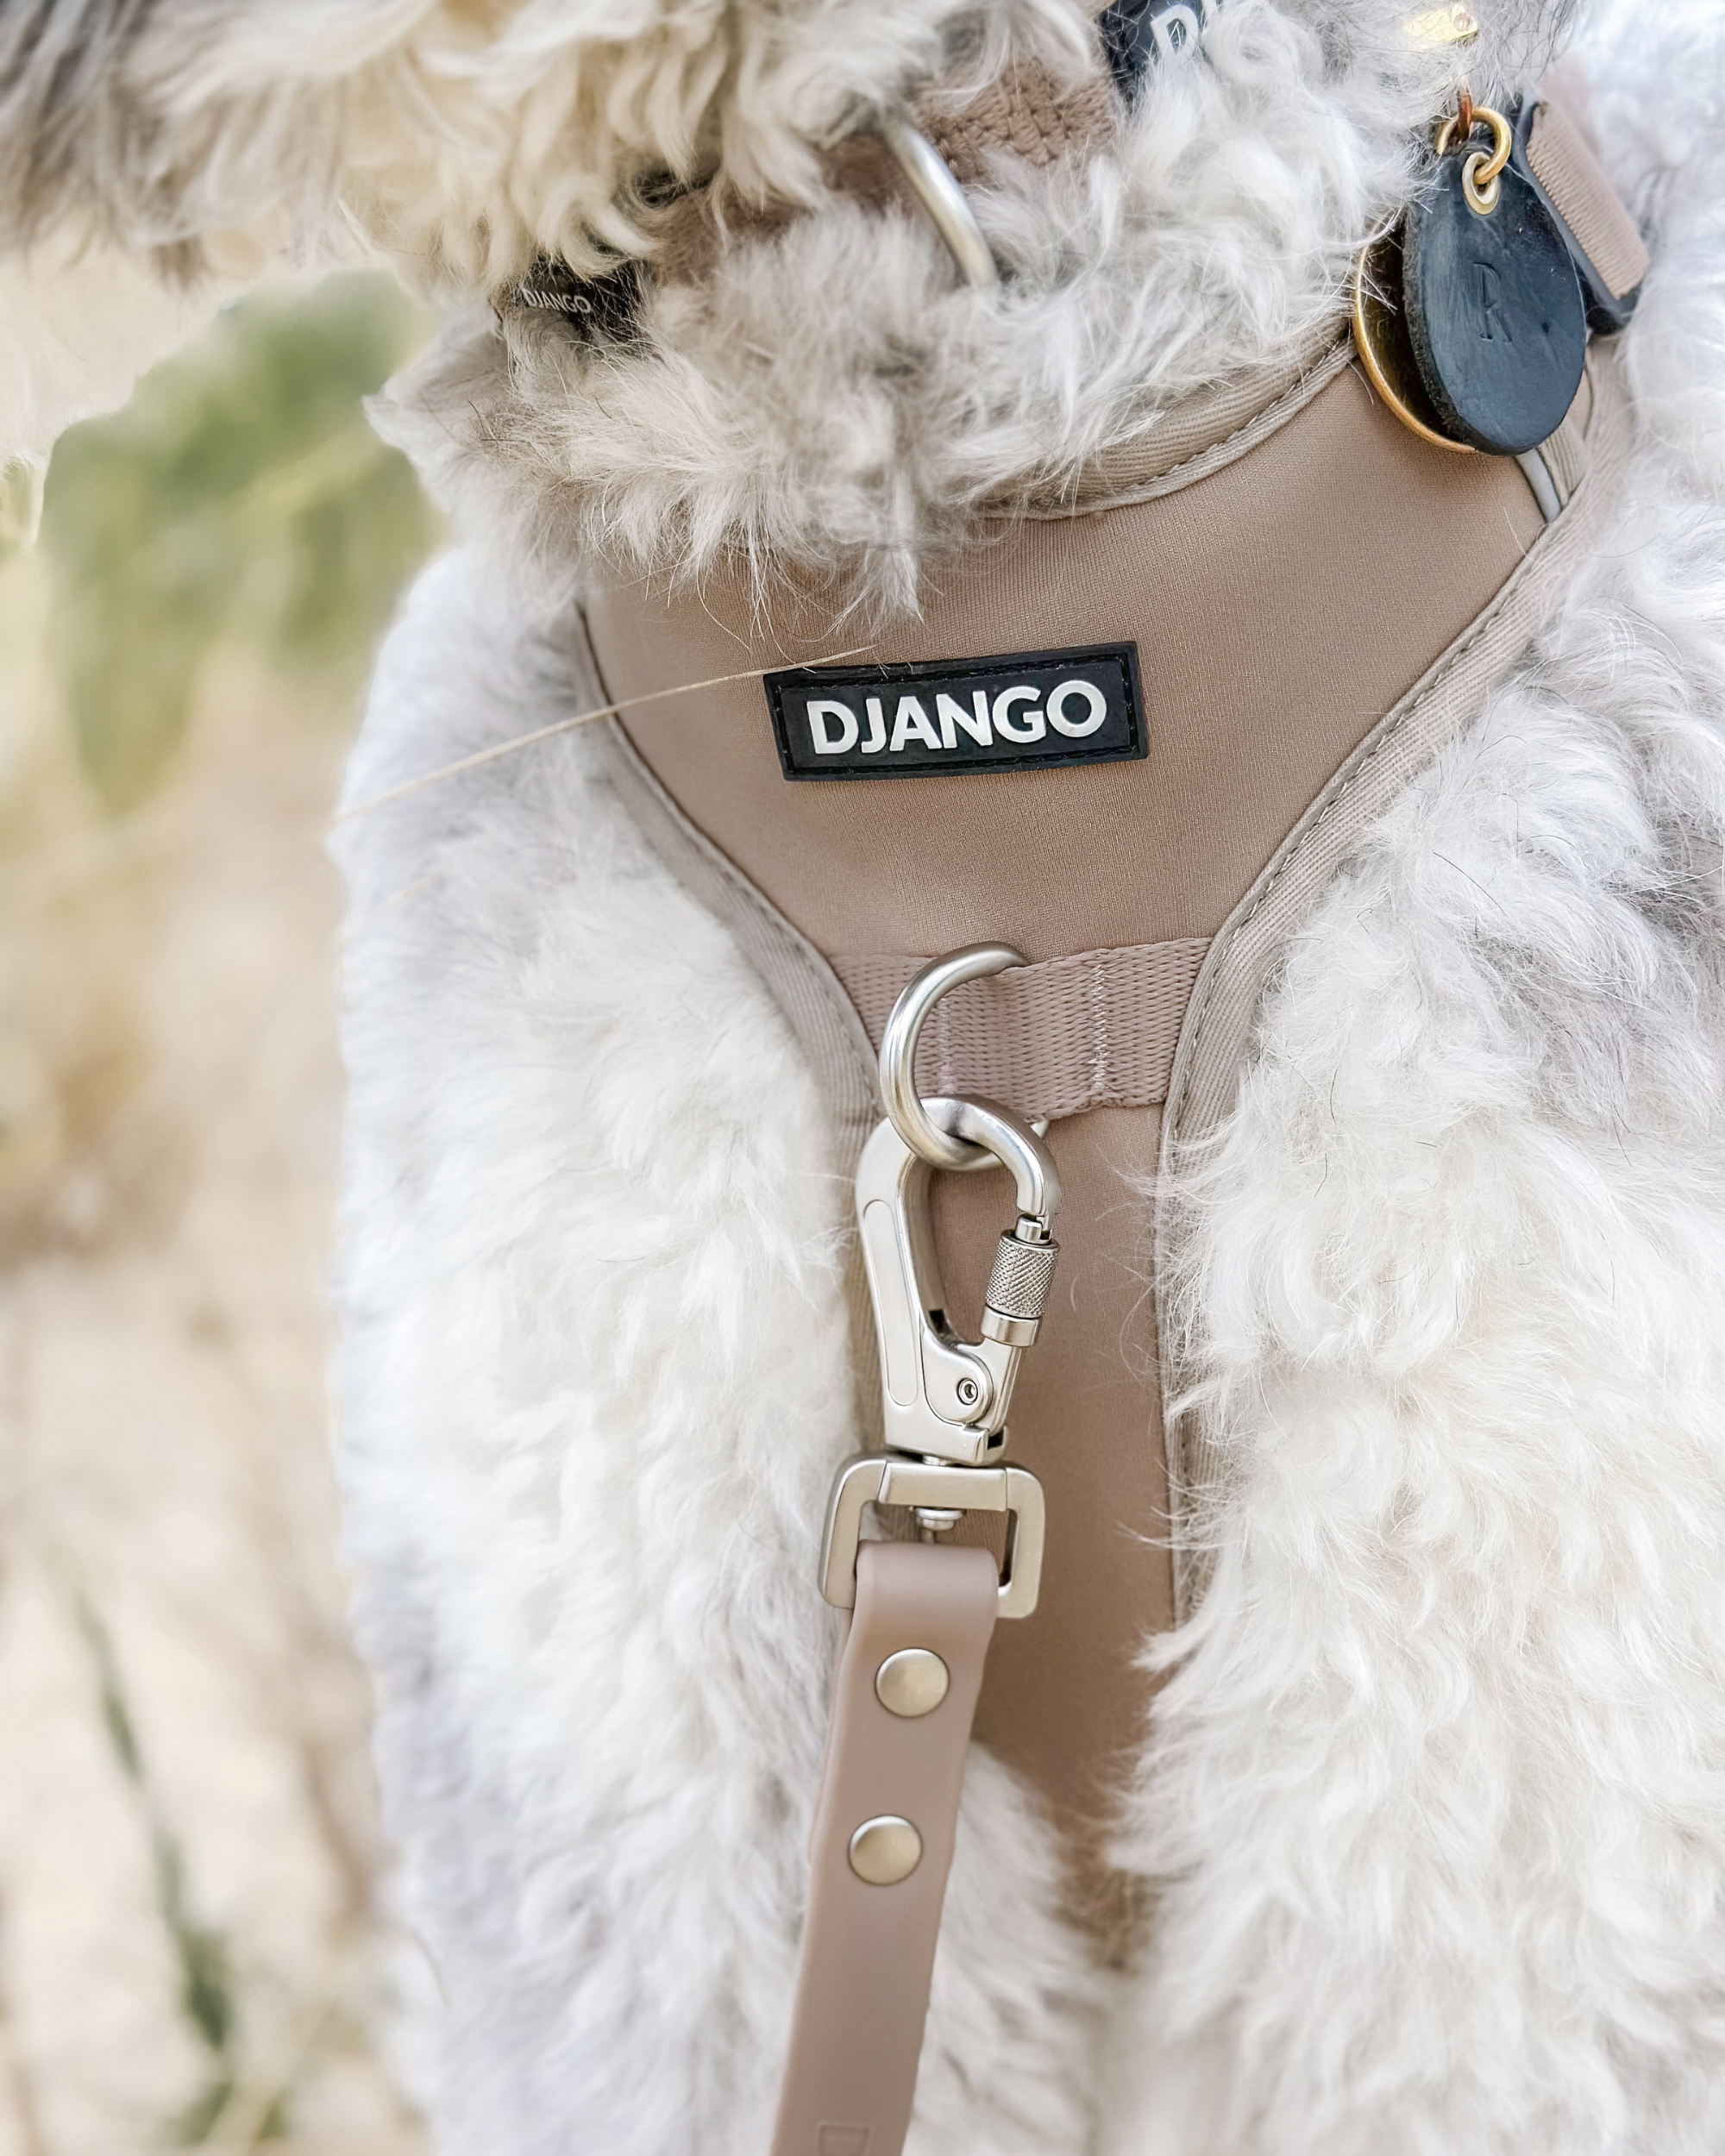 Pair your DJANGO Tahoe No Pull Dog Harness in Alpine Blue with the matching Sandy Beige Tahoe Waterproof Leash - djangobrand.com